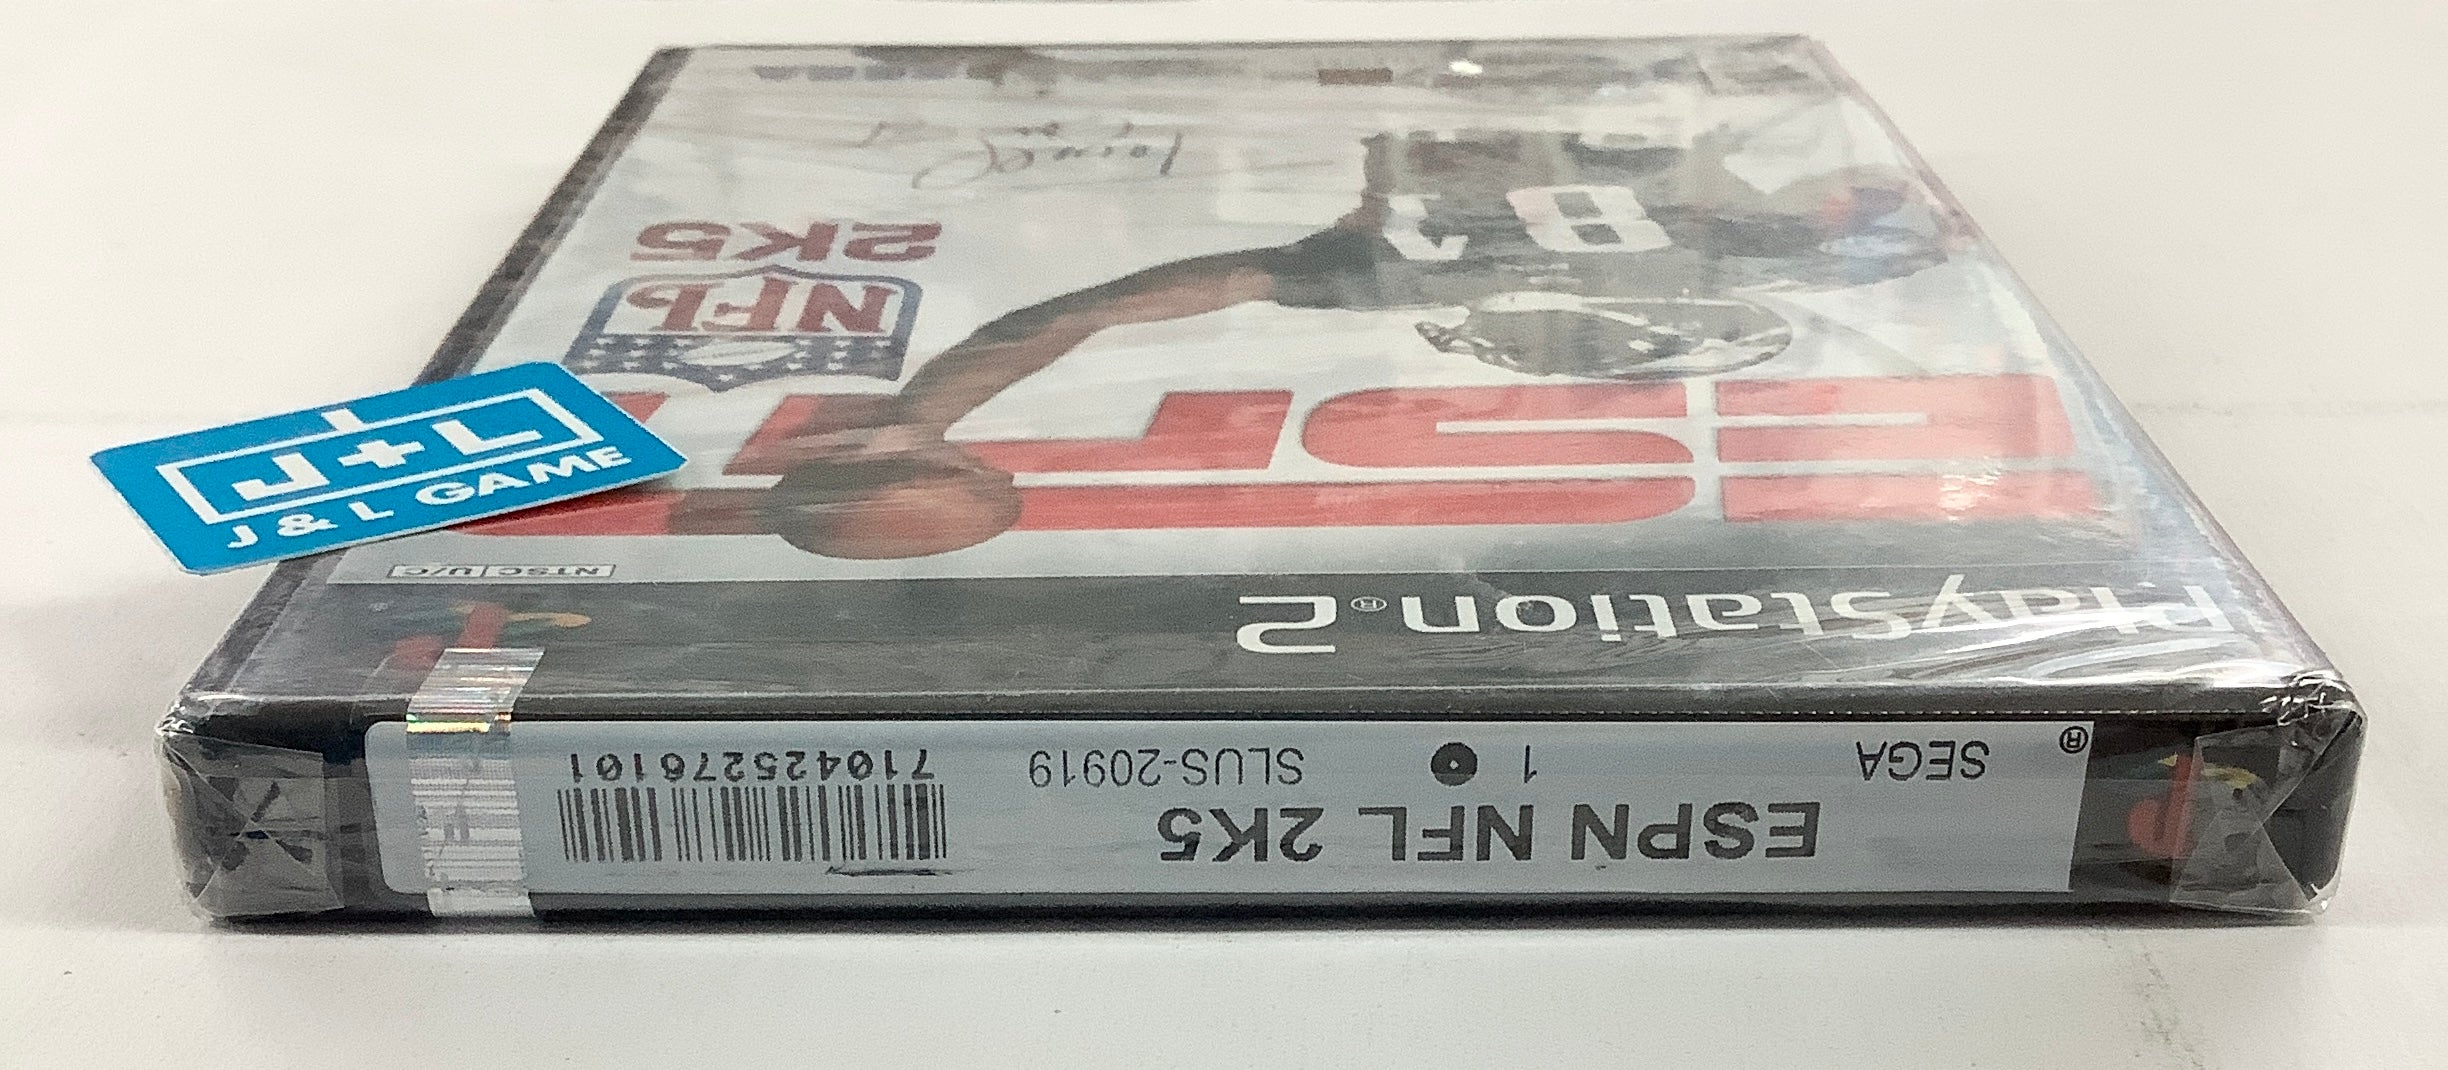 ESPN NFL 2K5 - (PS2) PlayStation 2 Video Games Sega   